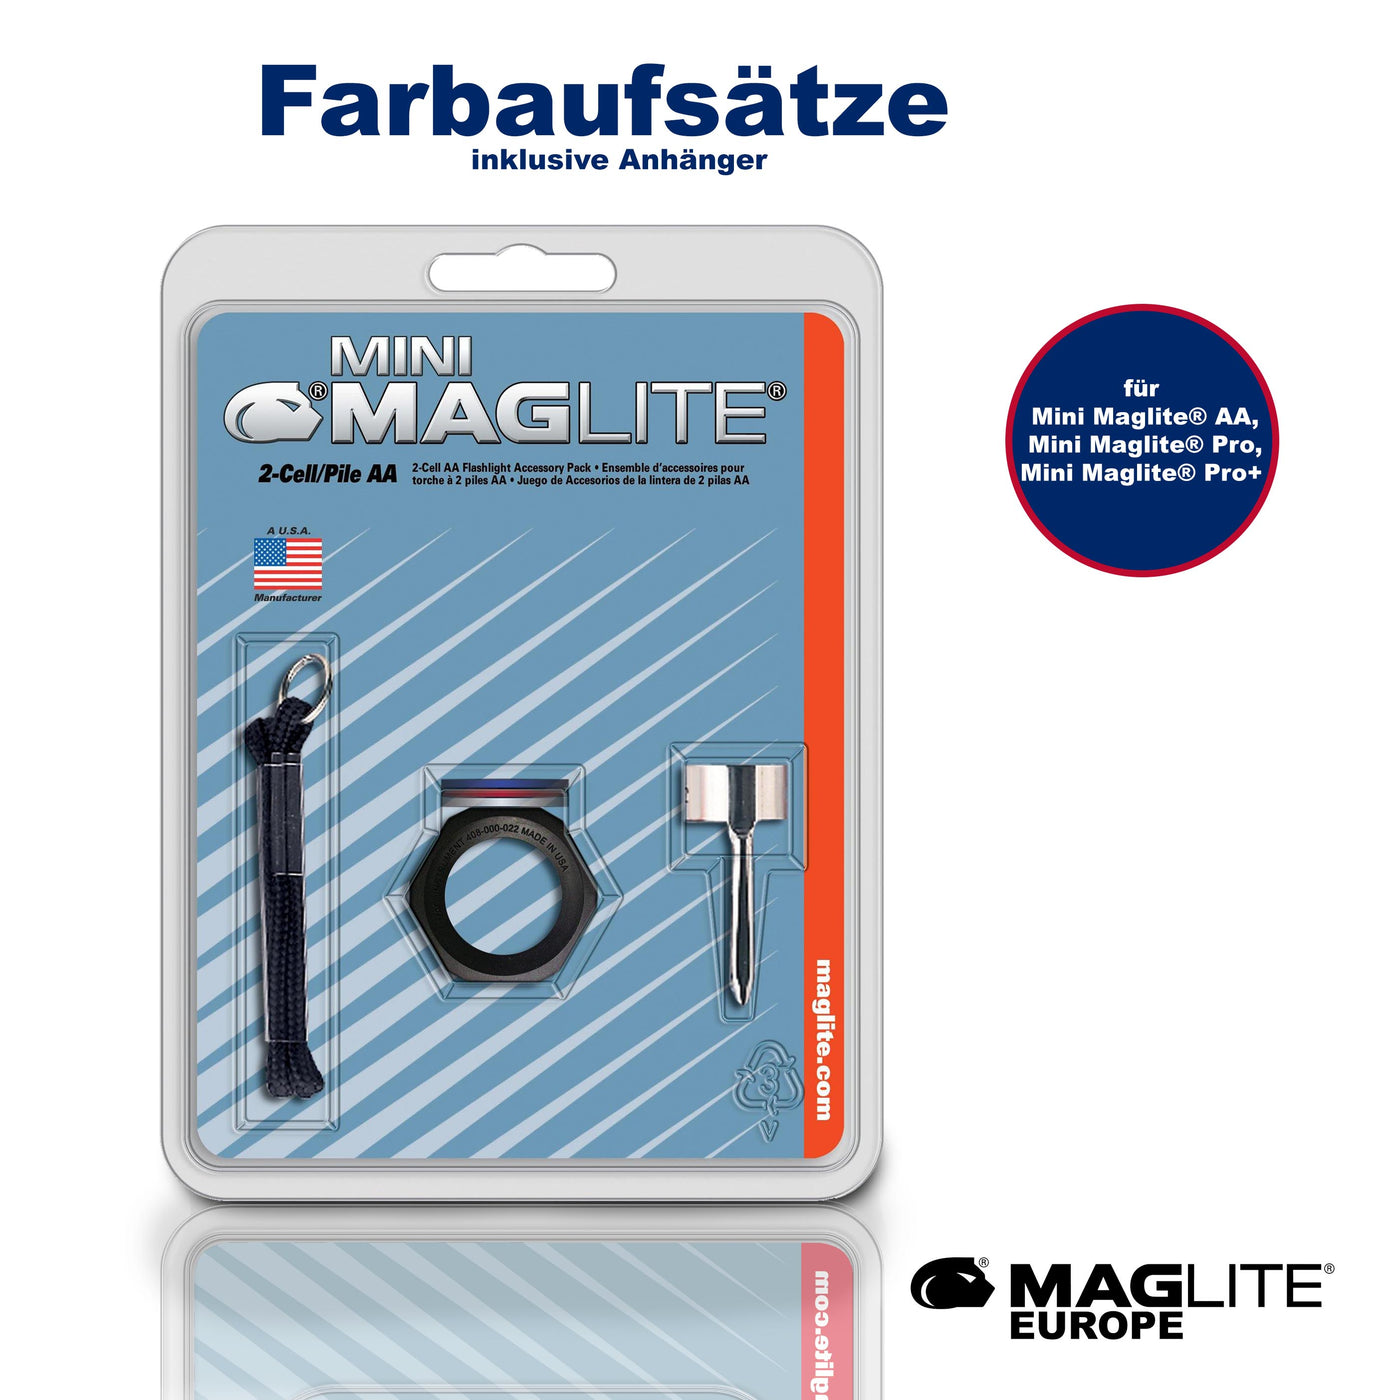 Accessory pack for Mini Maglite® AA